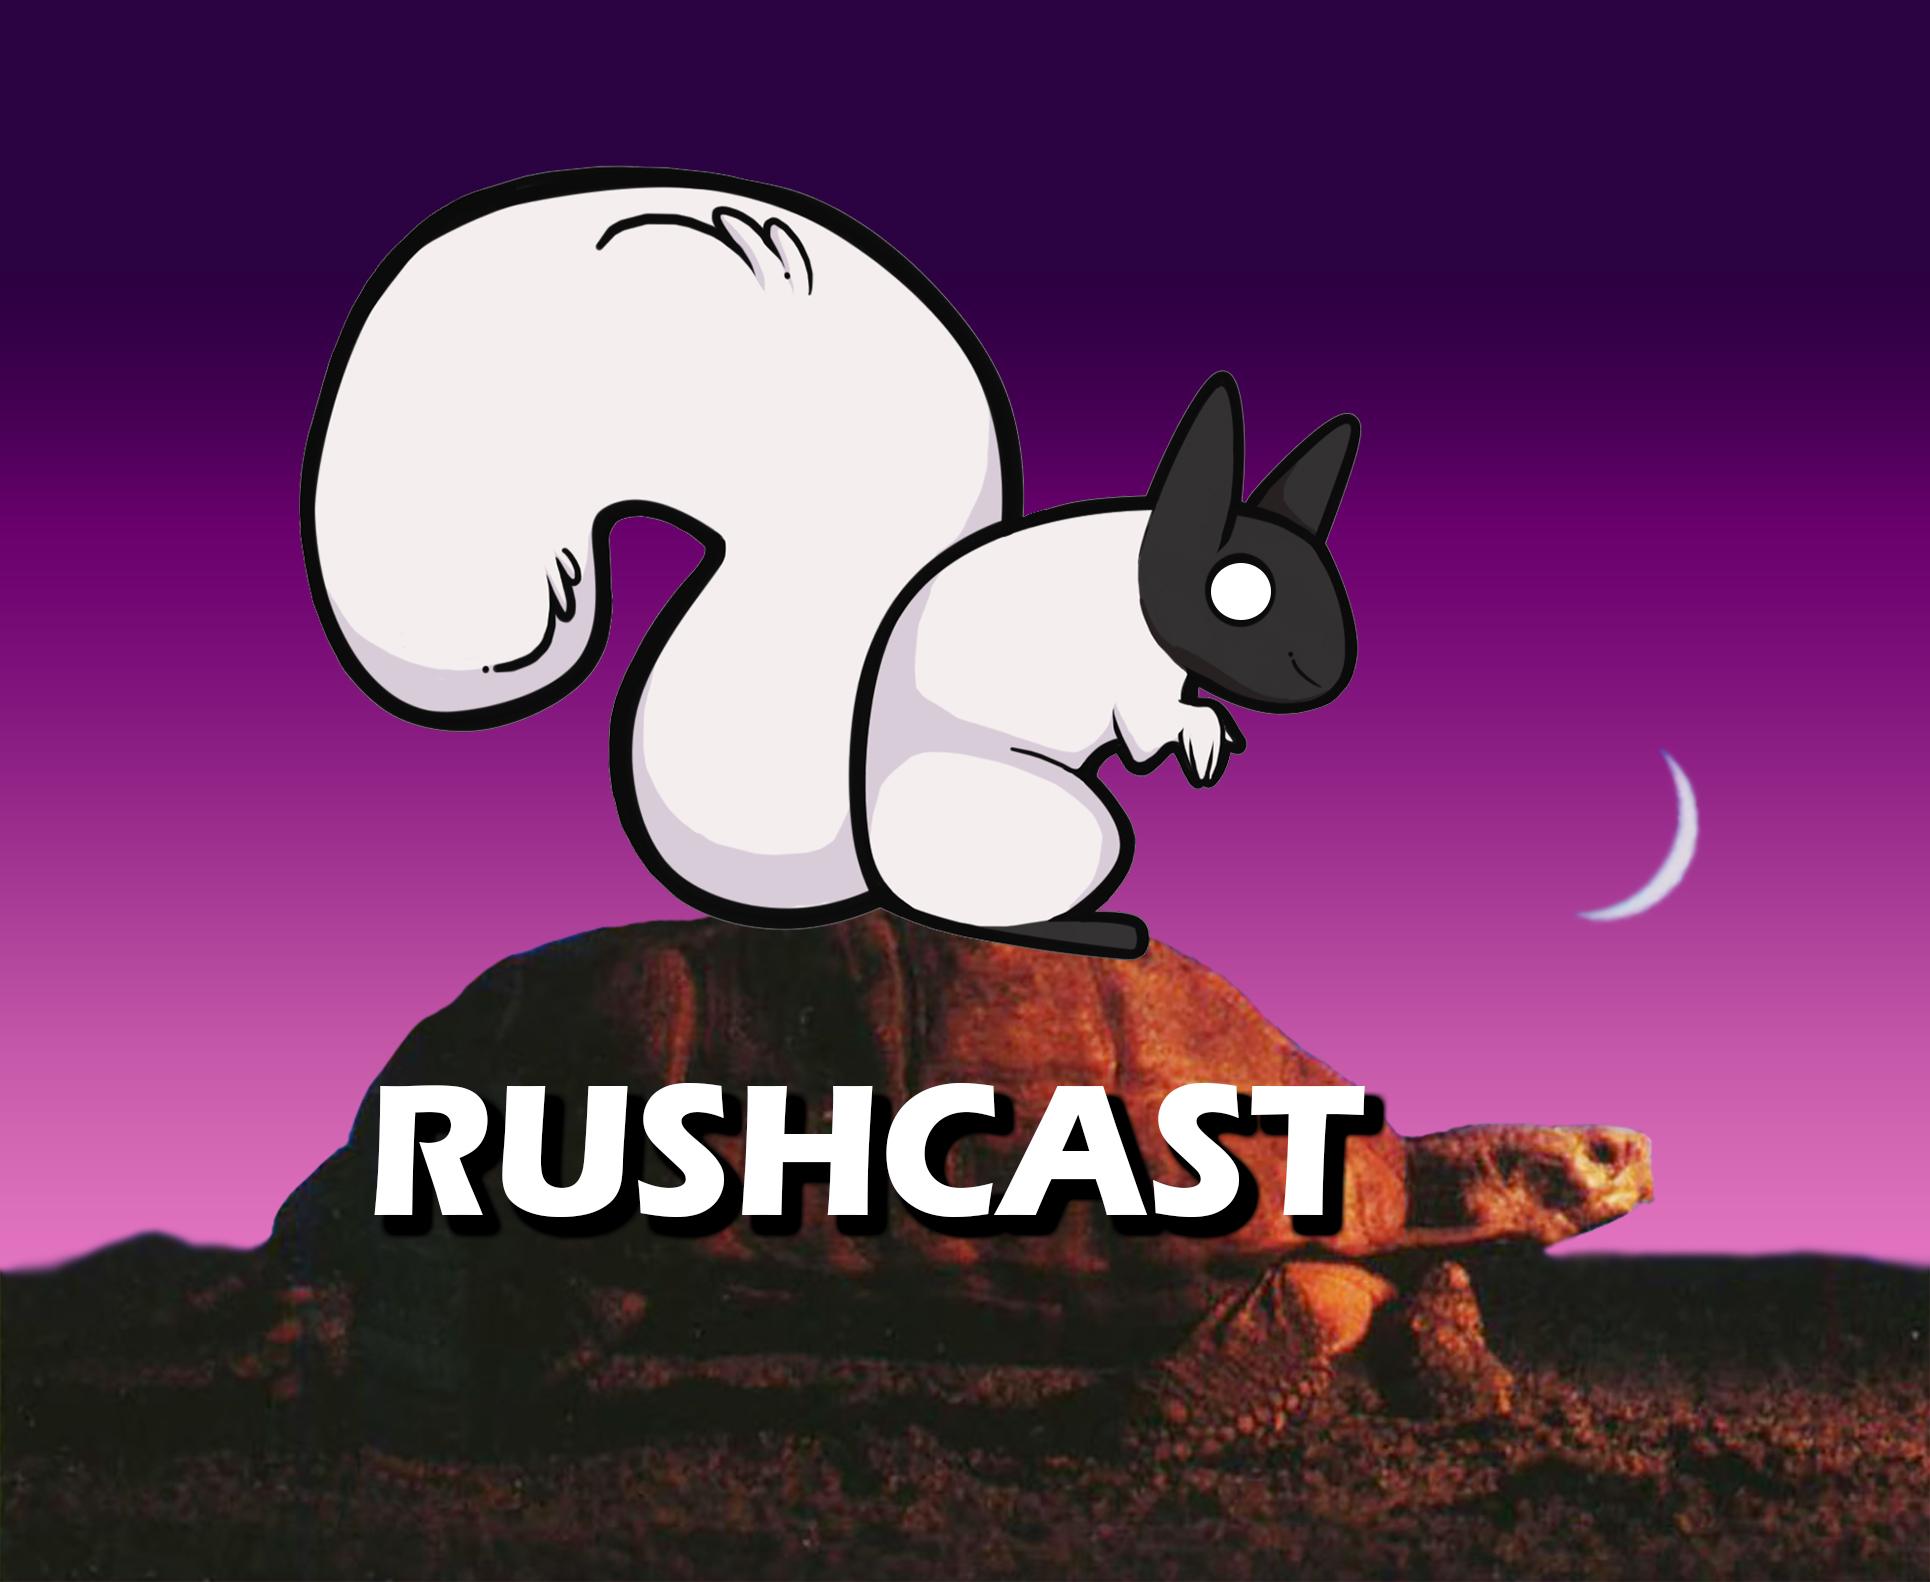 Rushcast